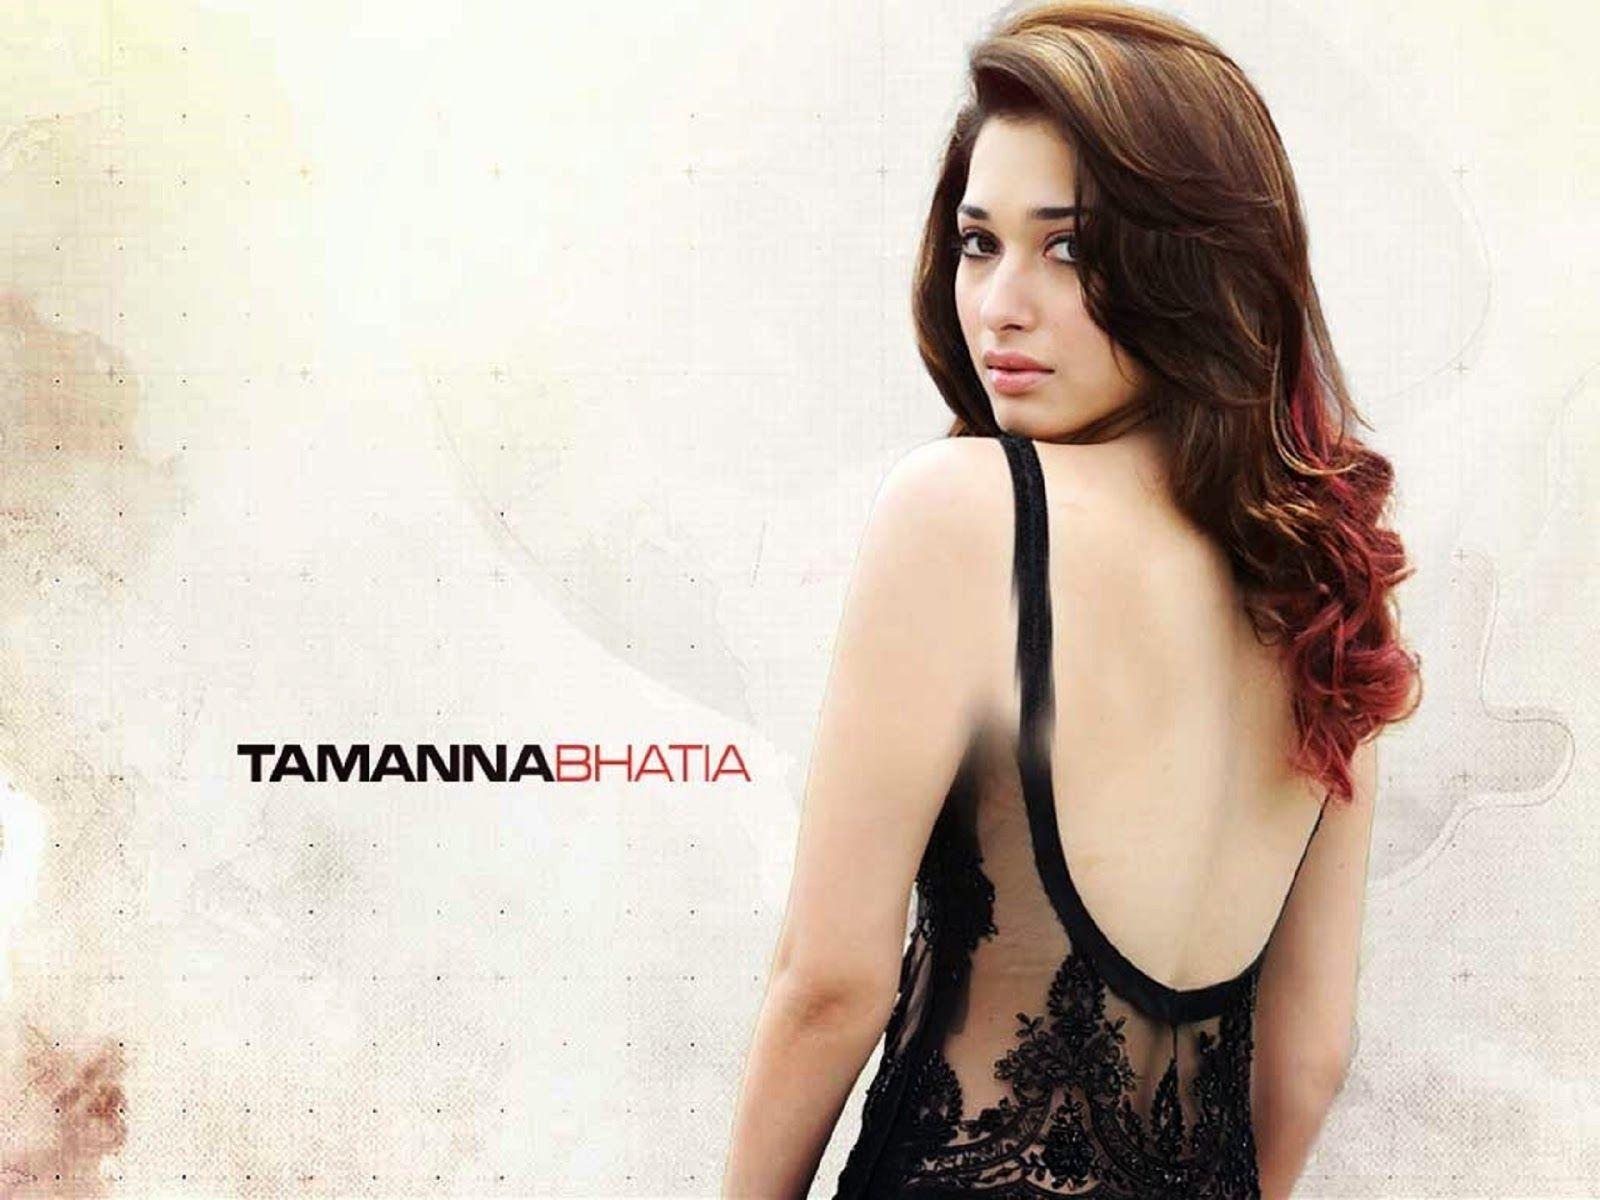 HD Tamanna Bhatia iPhone 5 Background. Wallpaper, Background